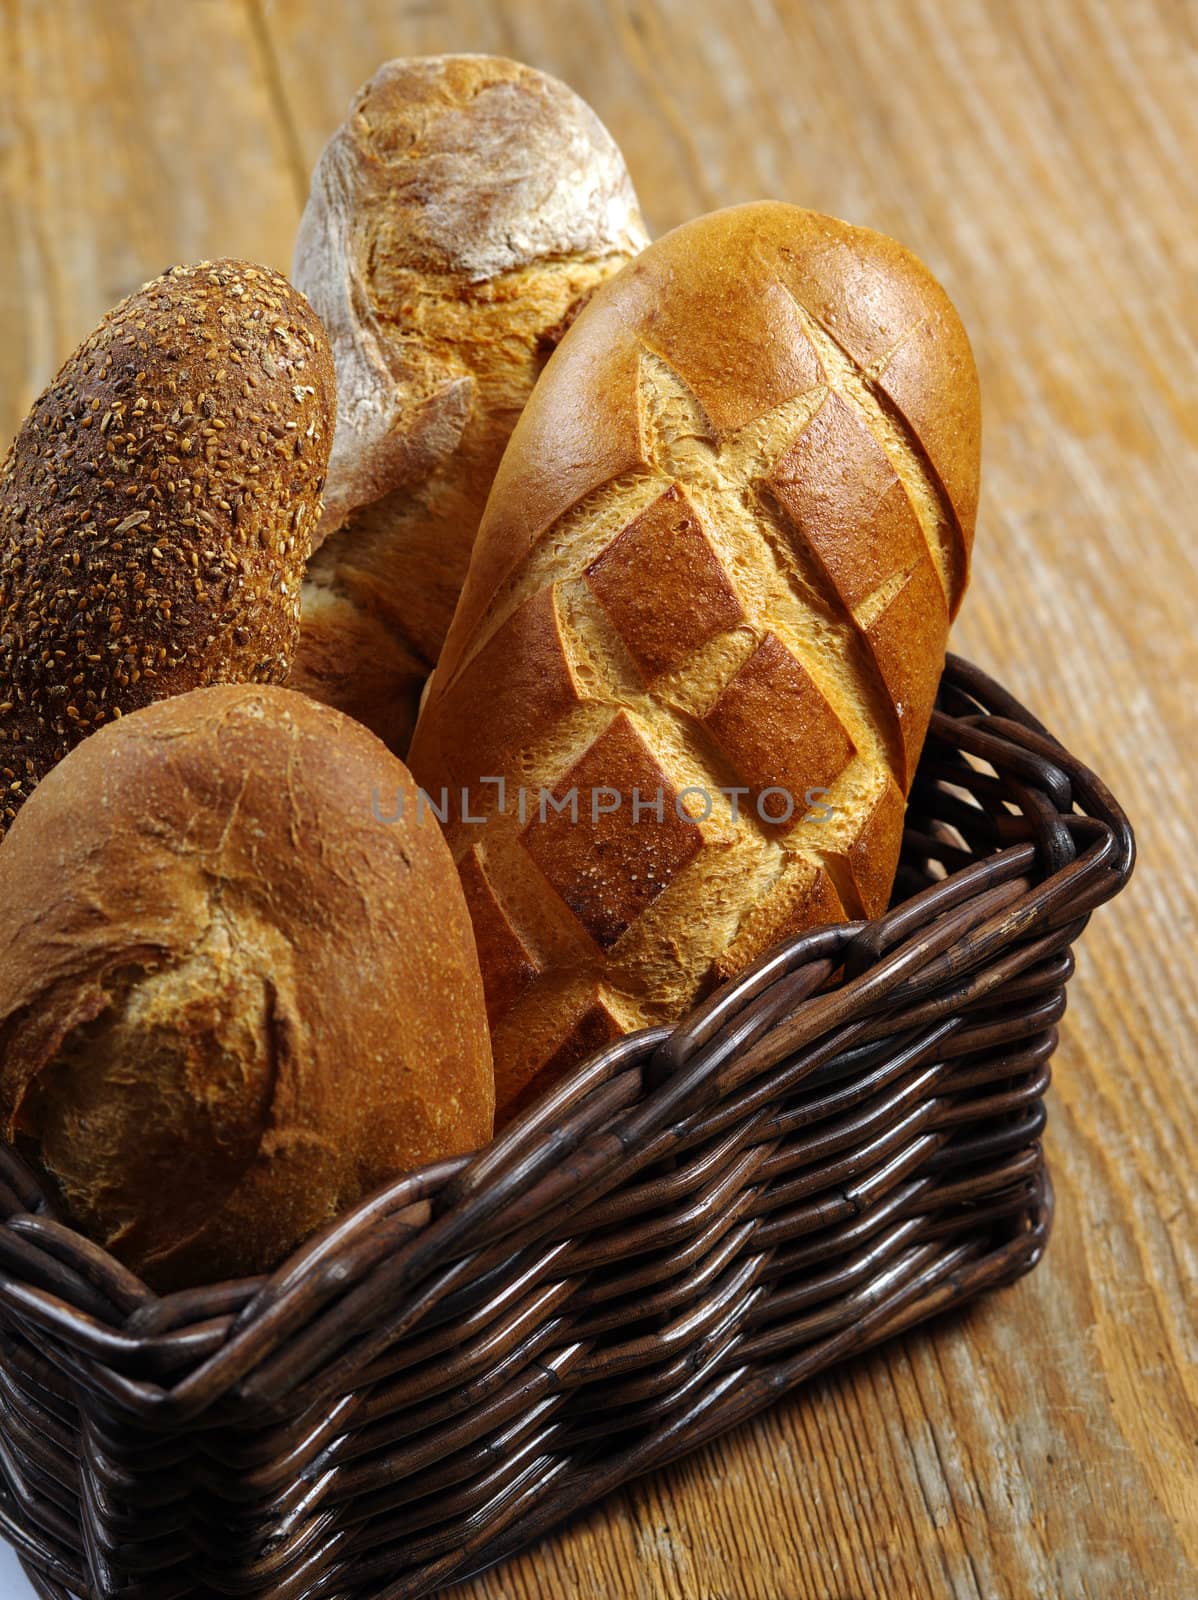 Photo of loaves of uncut bread resting in a wicker basket.
